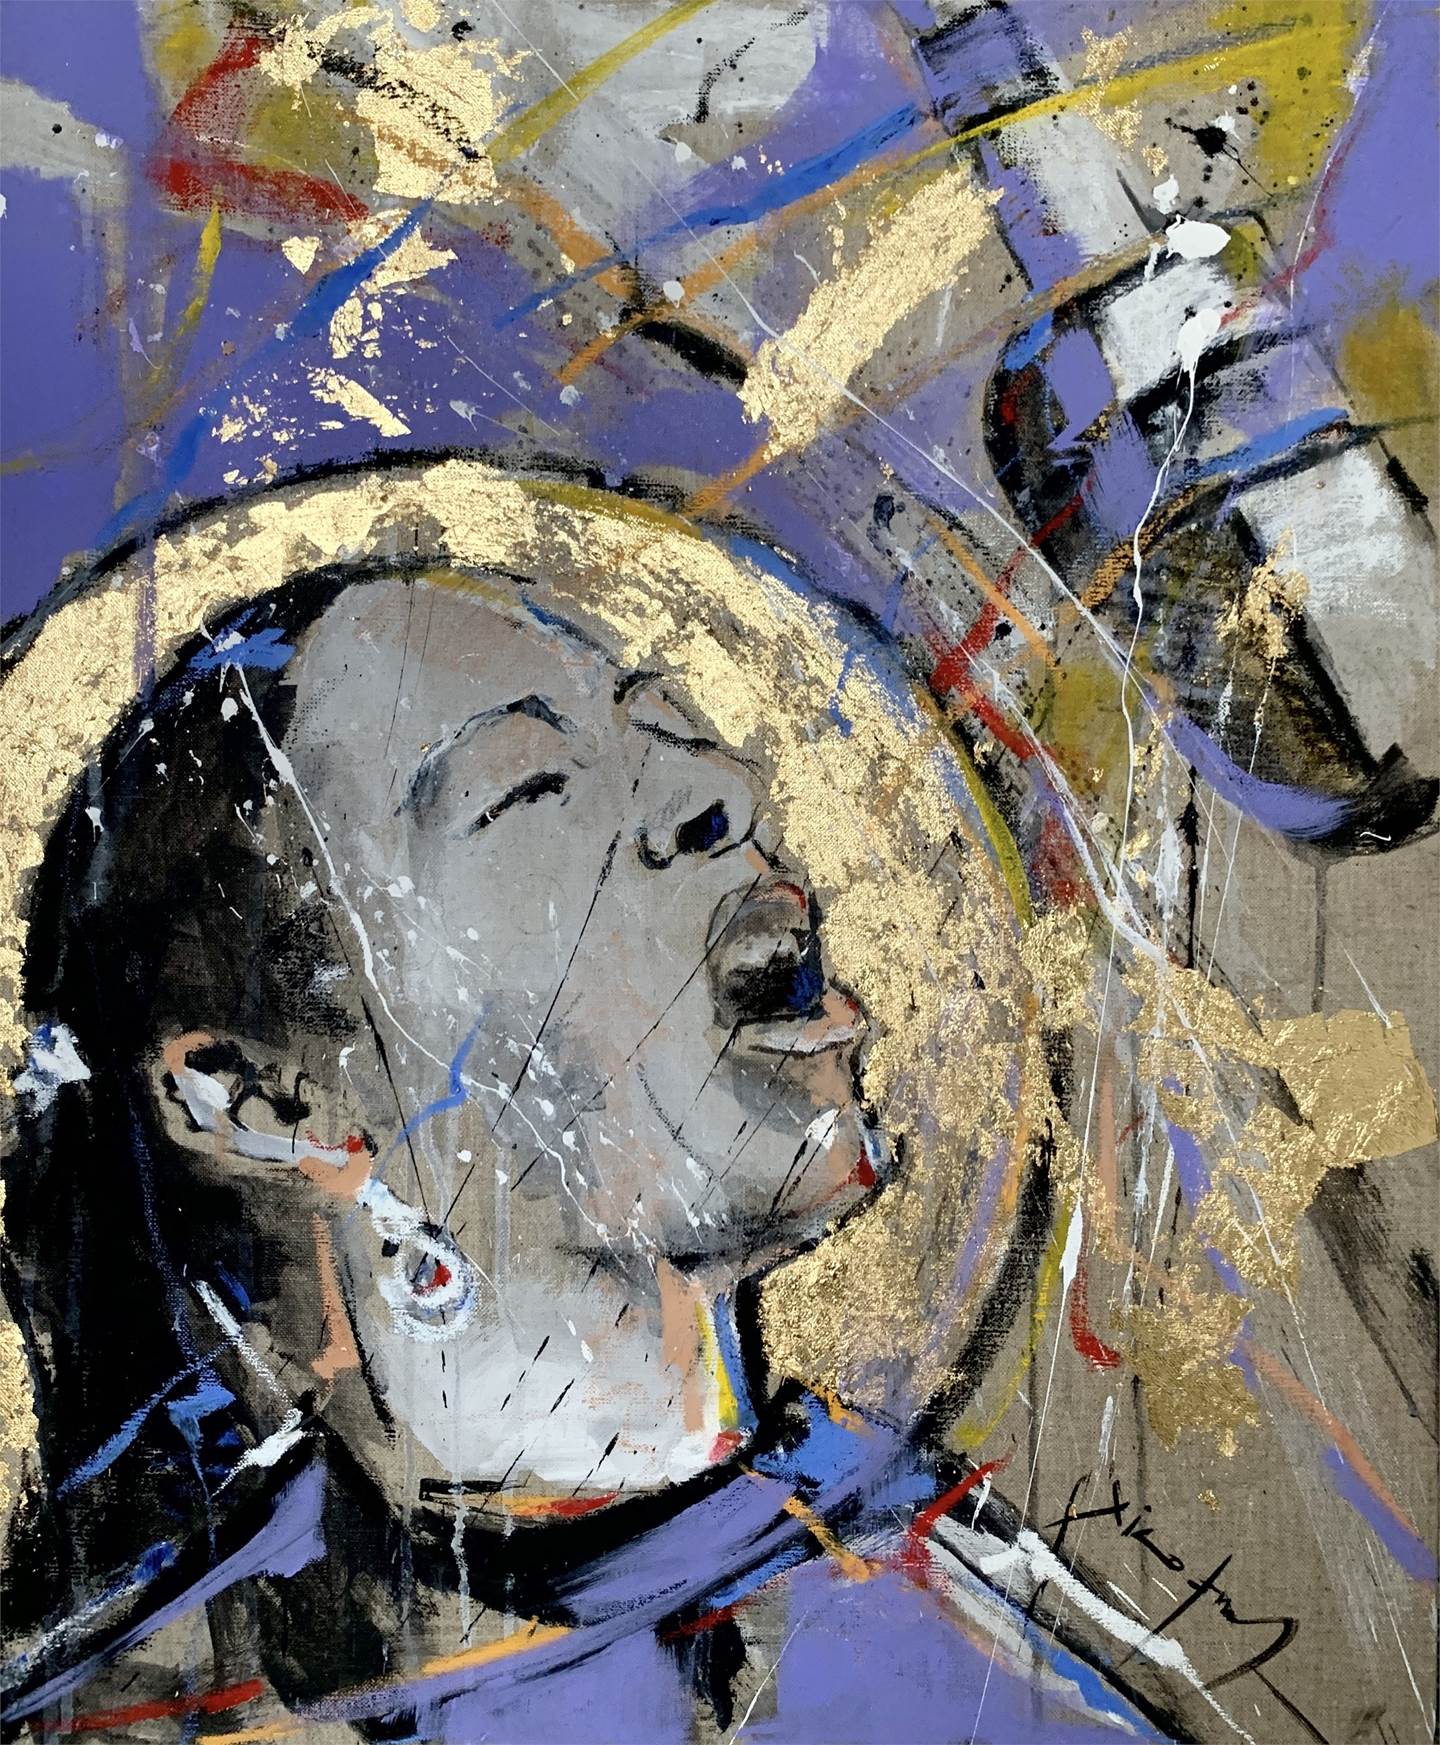 Billie Holiday , original Human Figure Acrylic Painting by Xicofran .